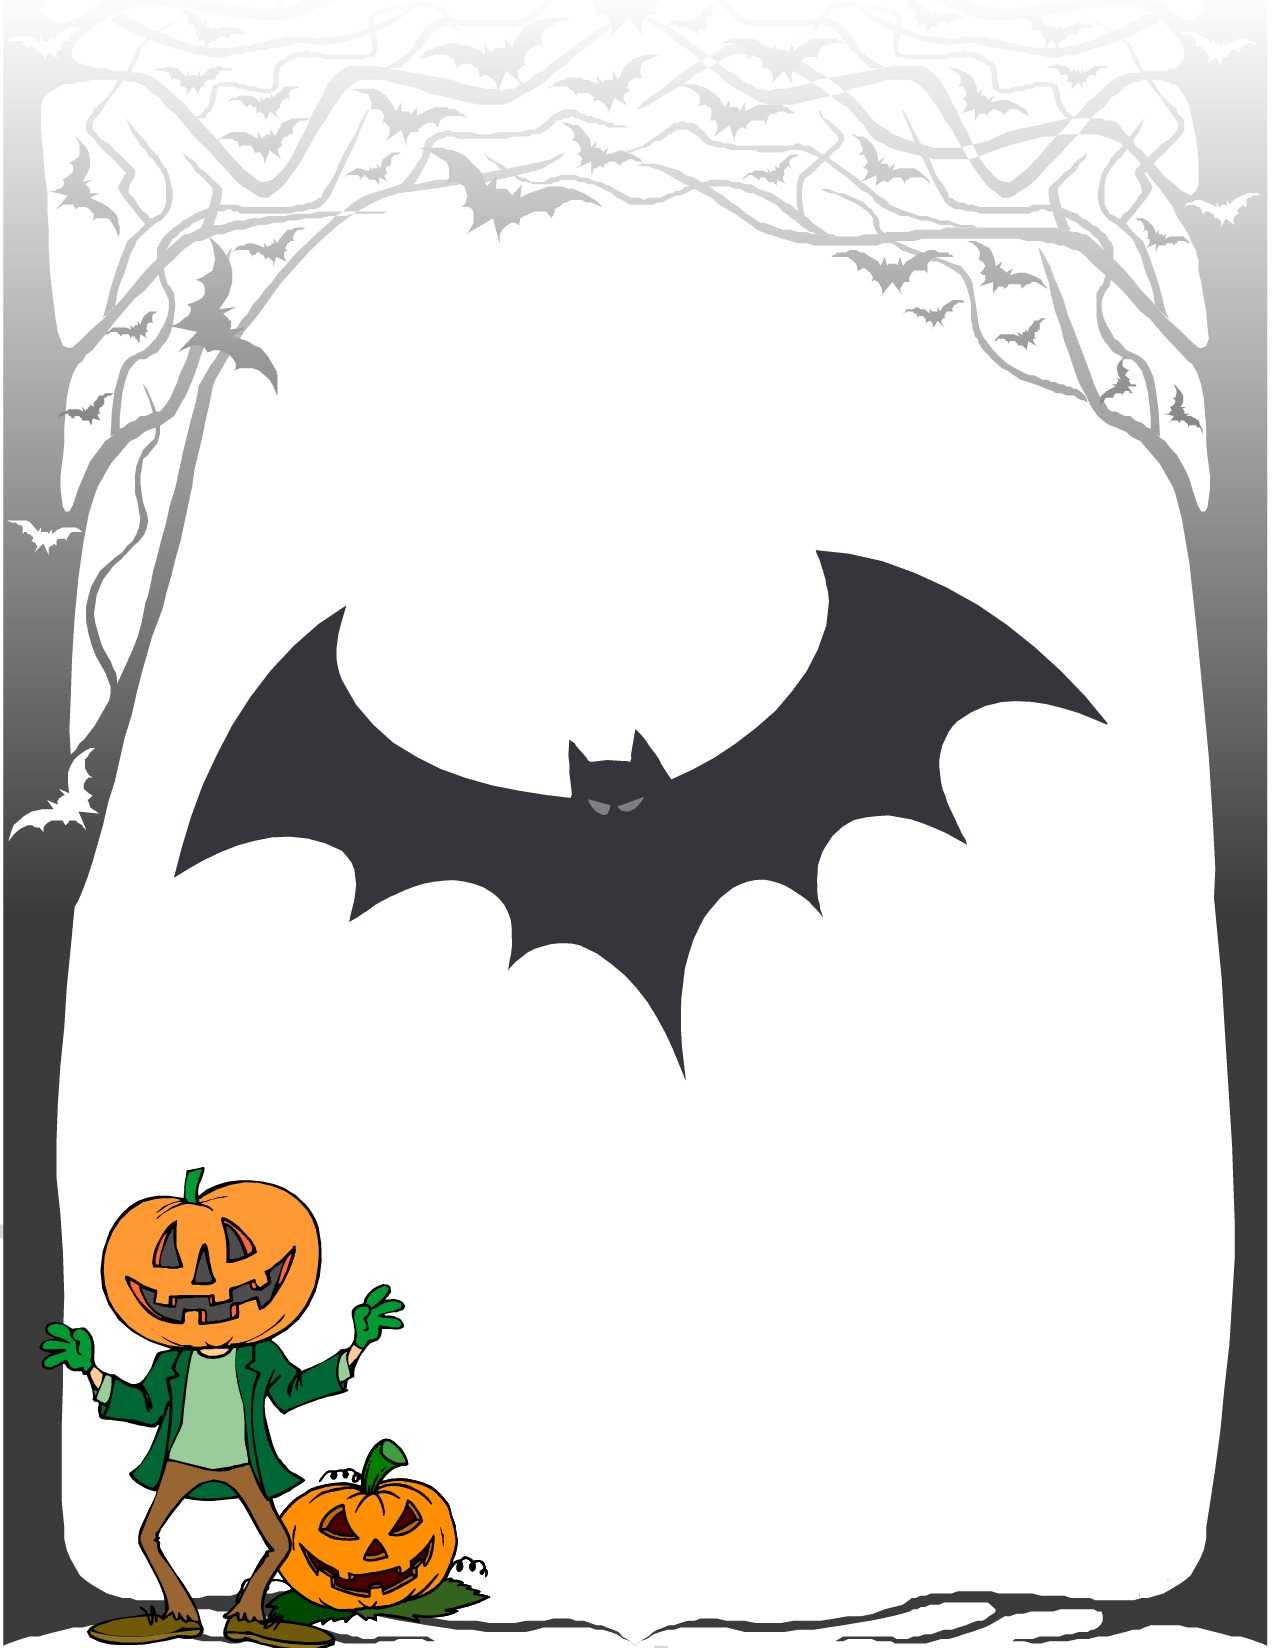 Halloween Award Certificate Maker Regarding Halloween Costume Certificate Template